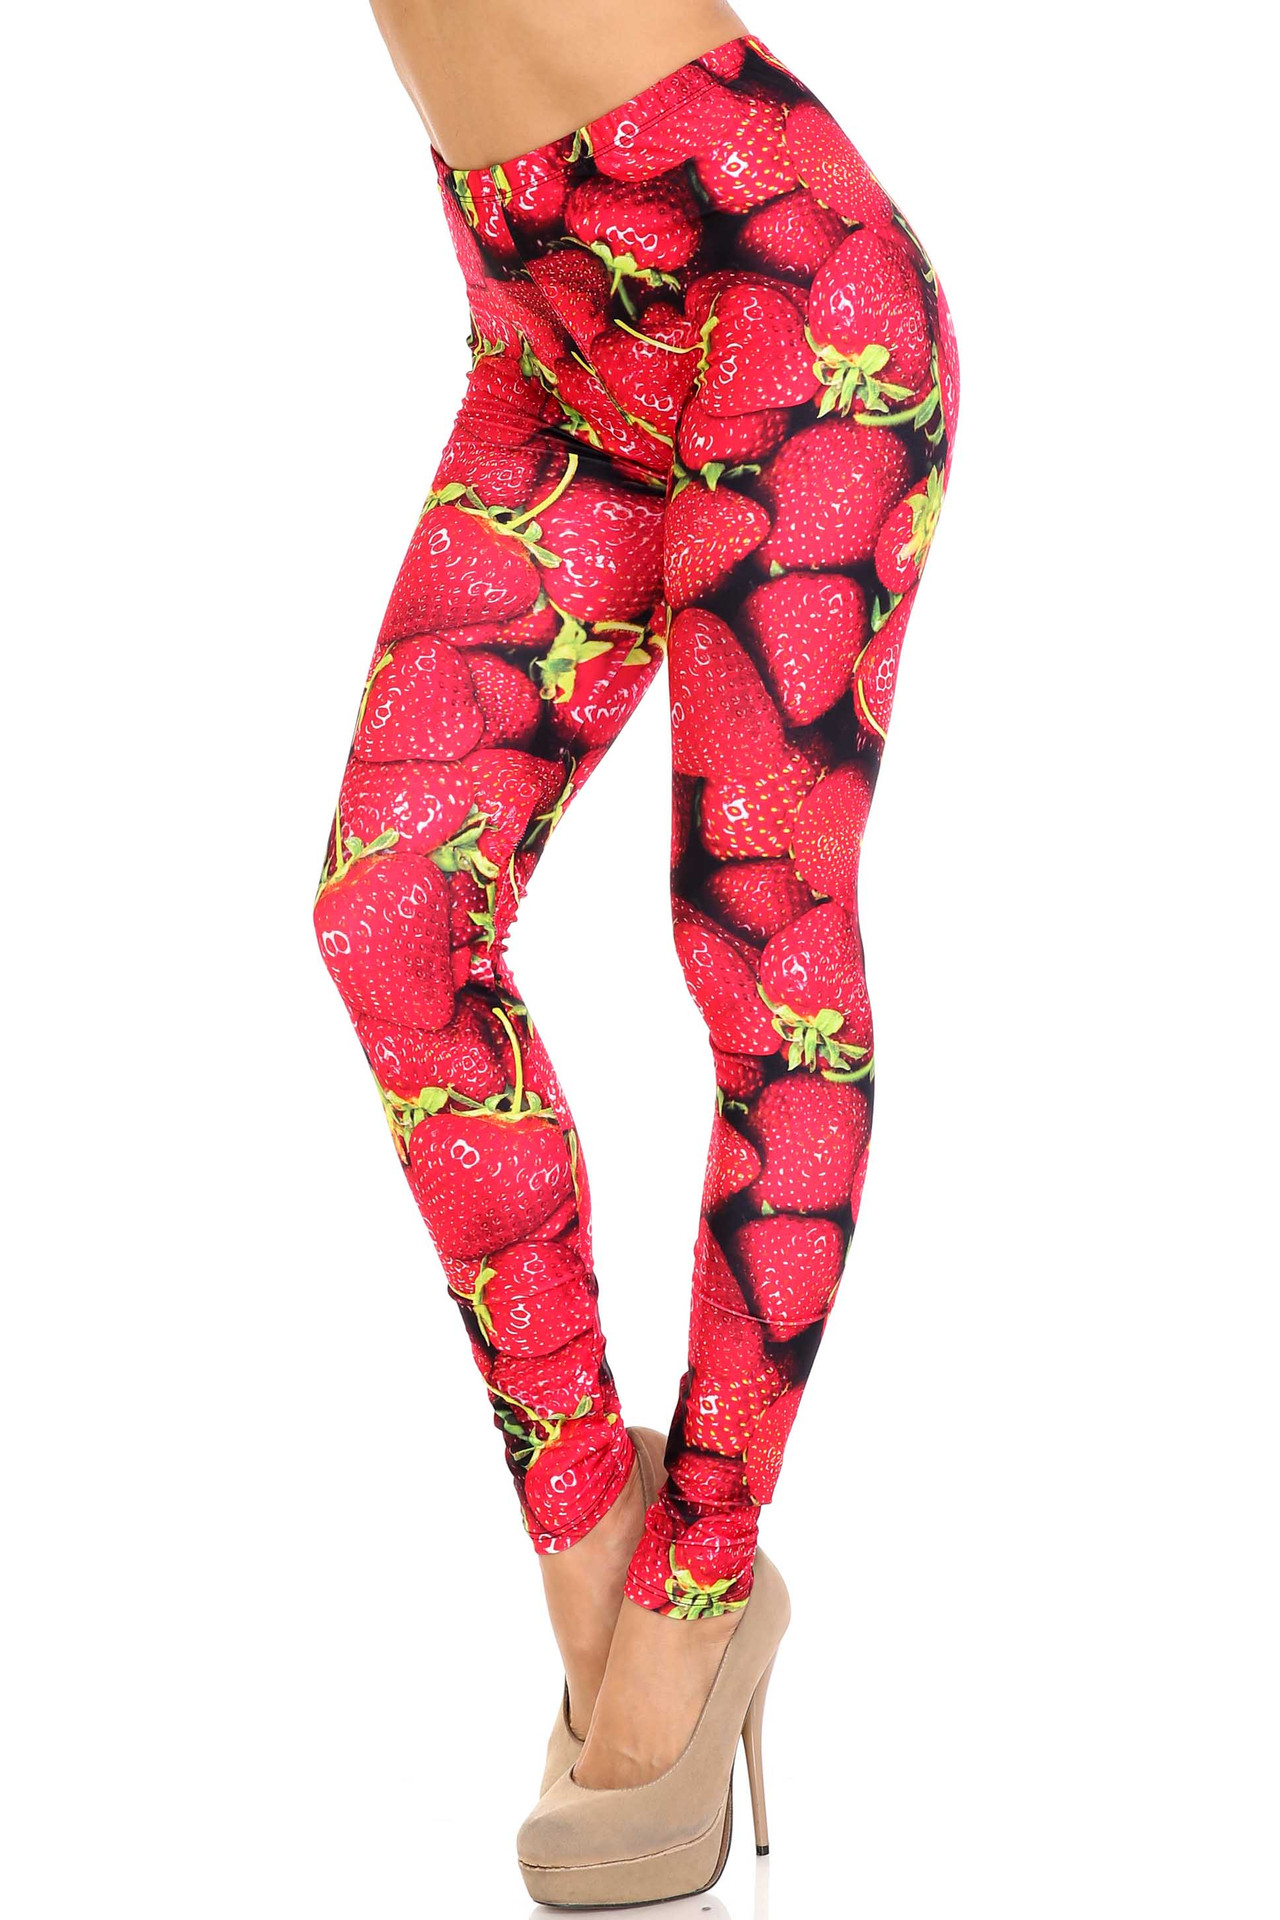 Creamy Soft Strawberry Extra Plus Size Leggings - 3X-5X - USA Fashion™